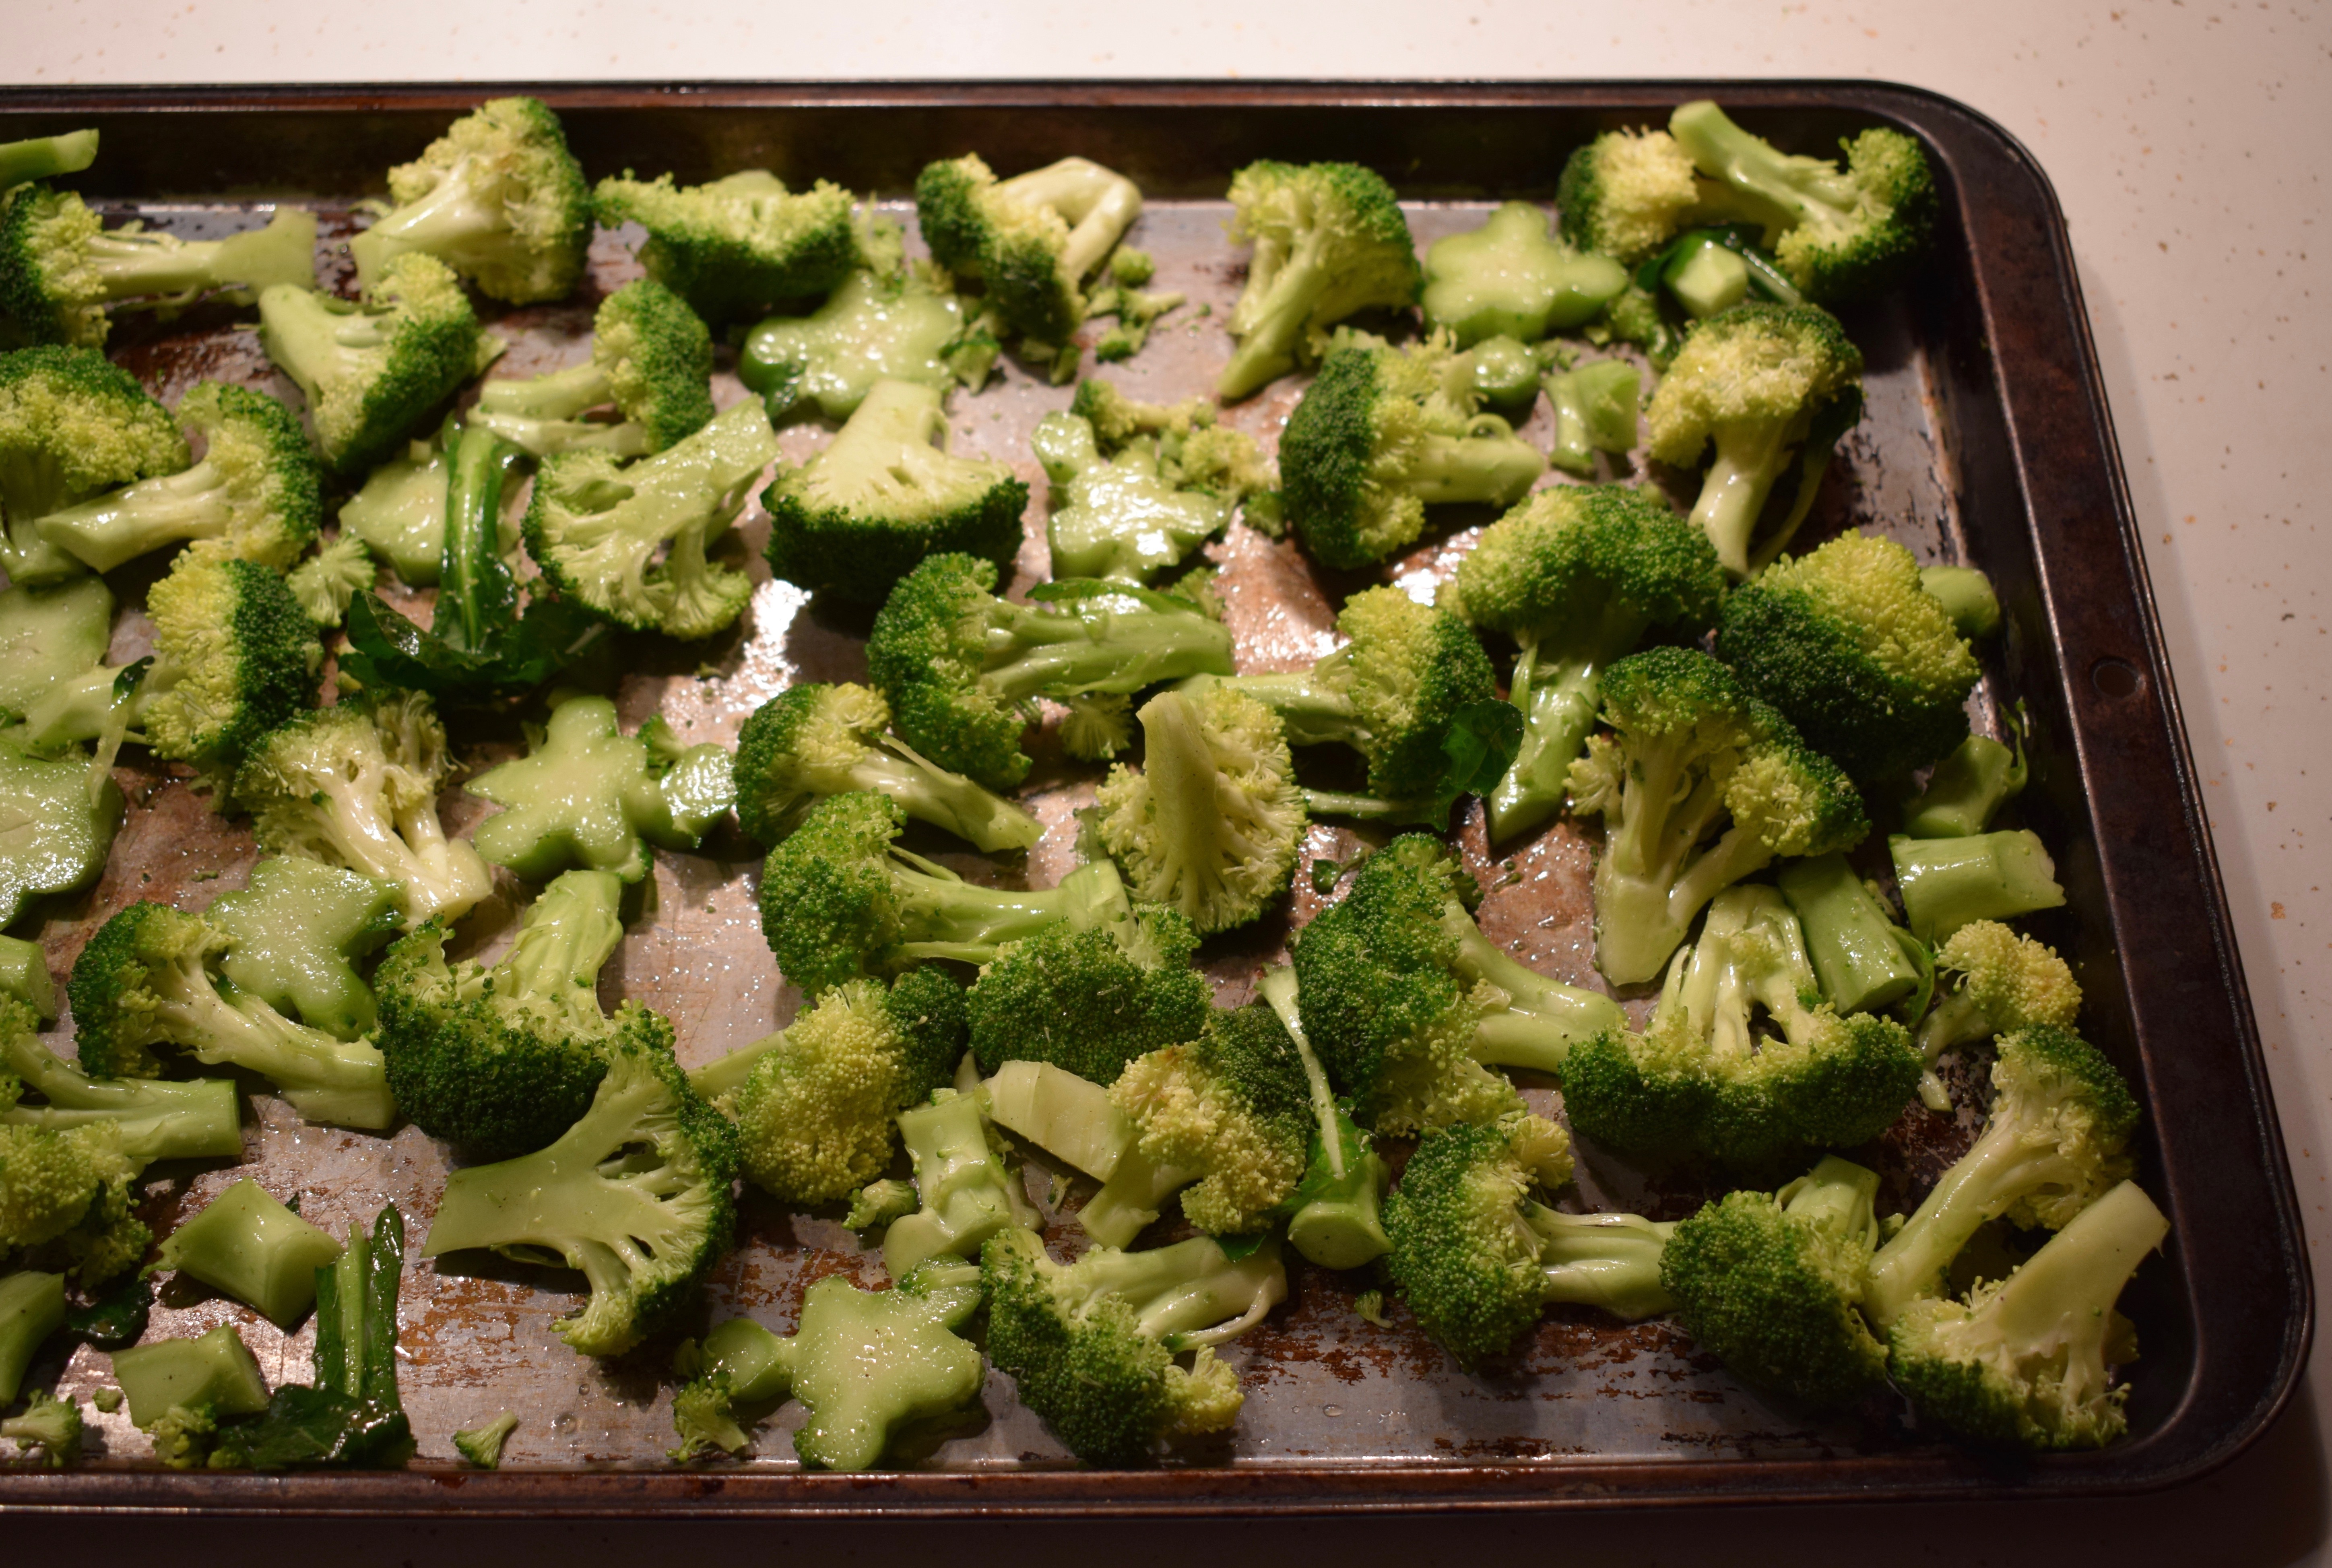 Broccoli Ready to Roast